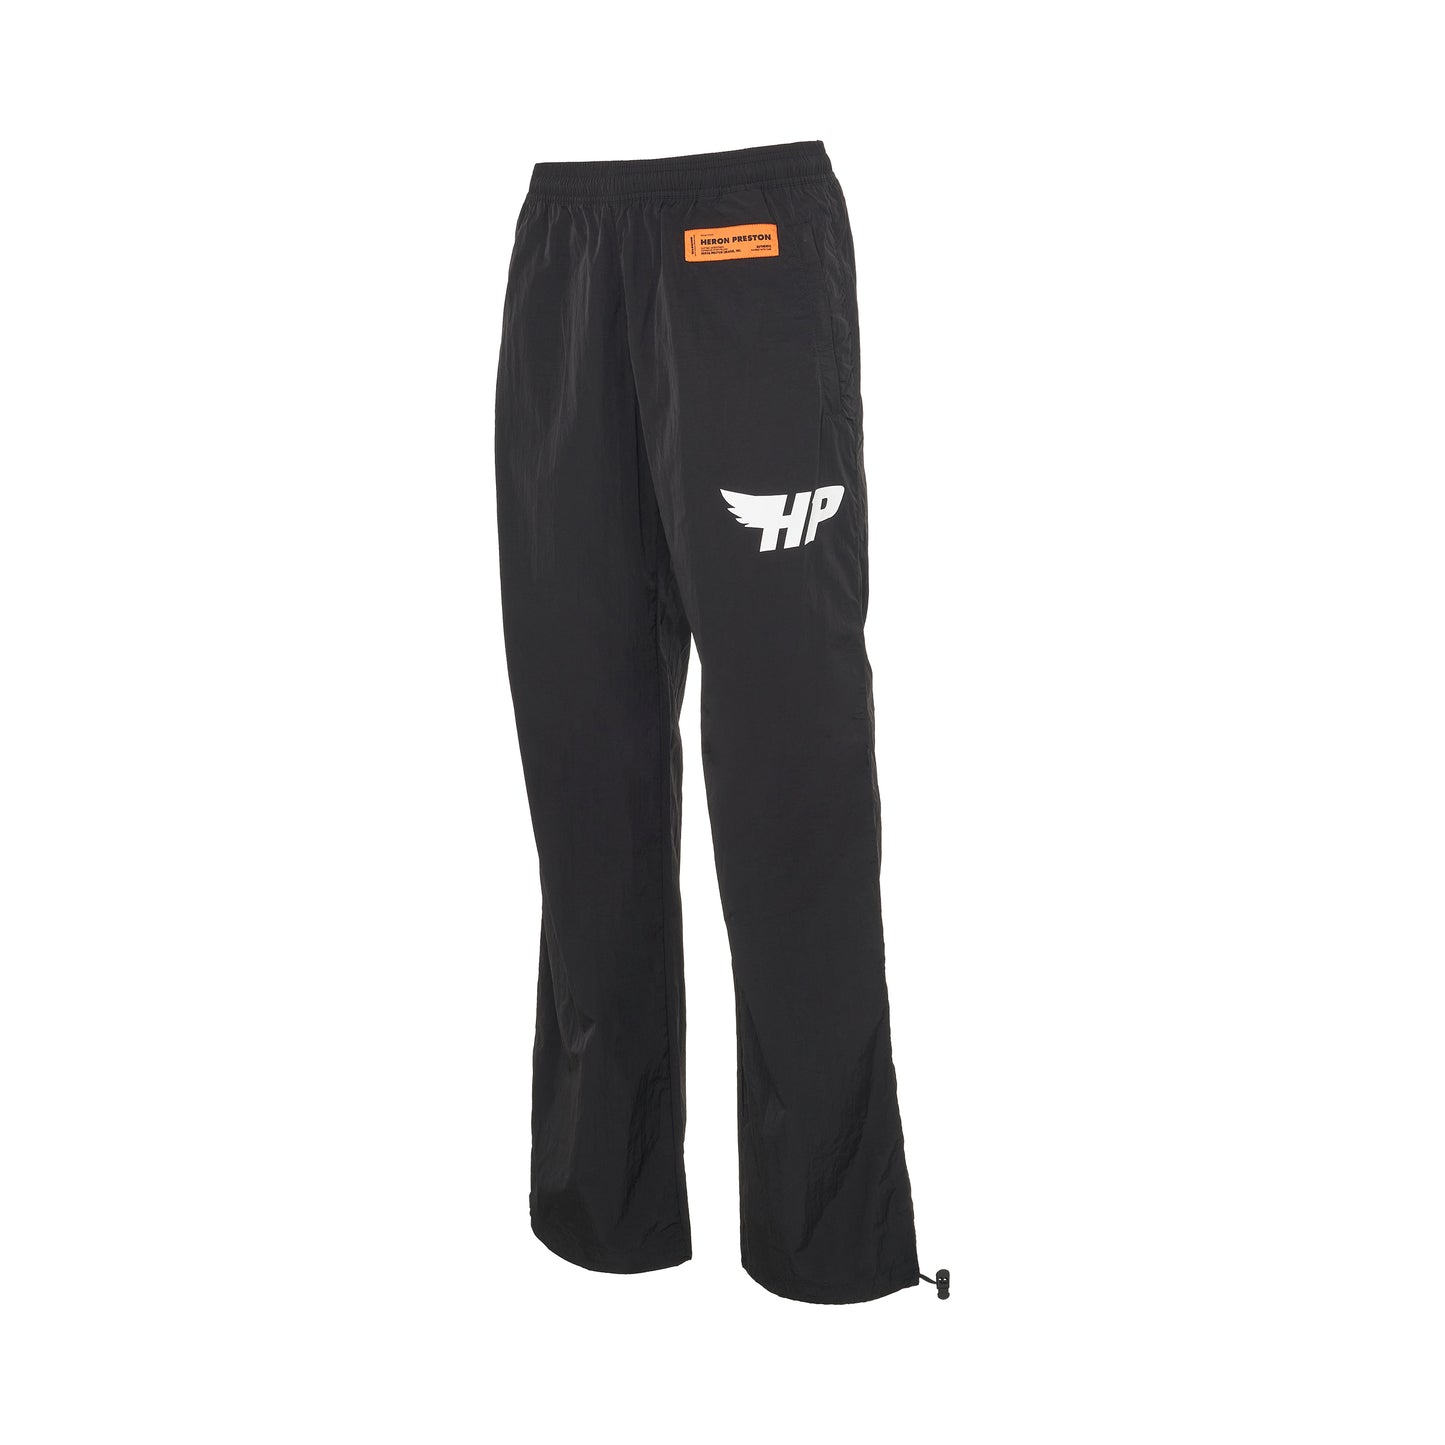 Heron Fly Nylon Trackpants in Black/White